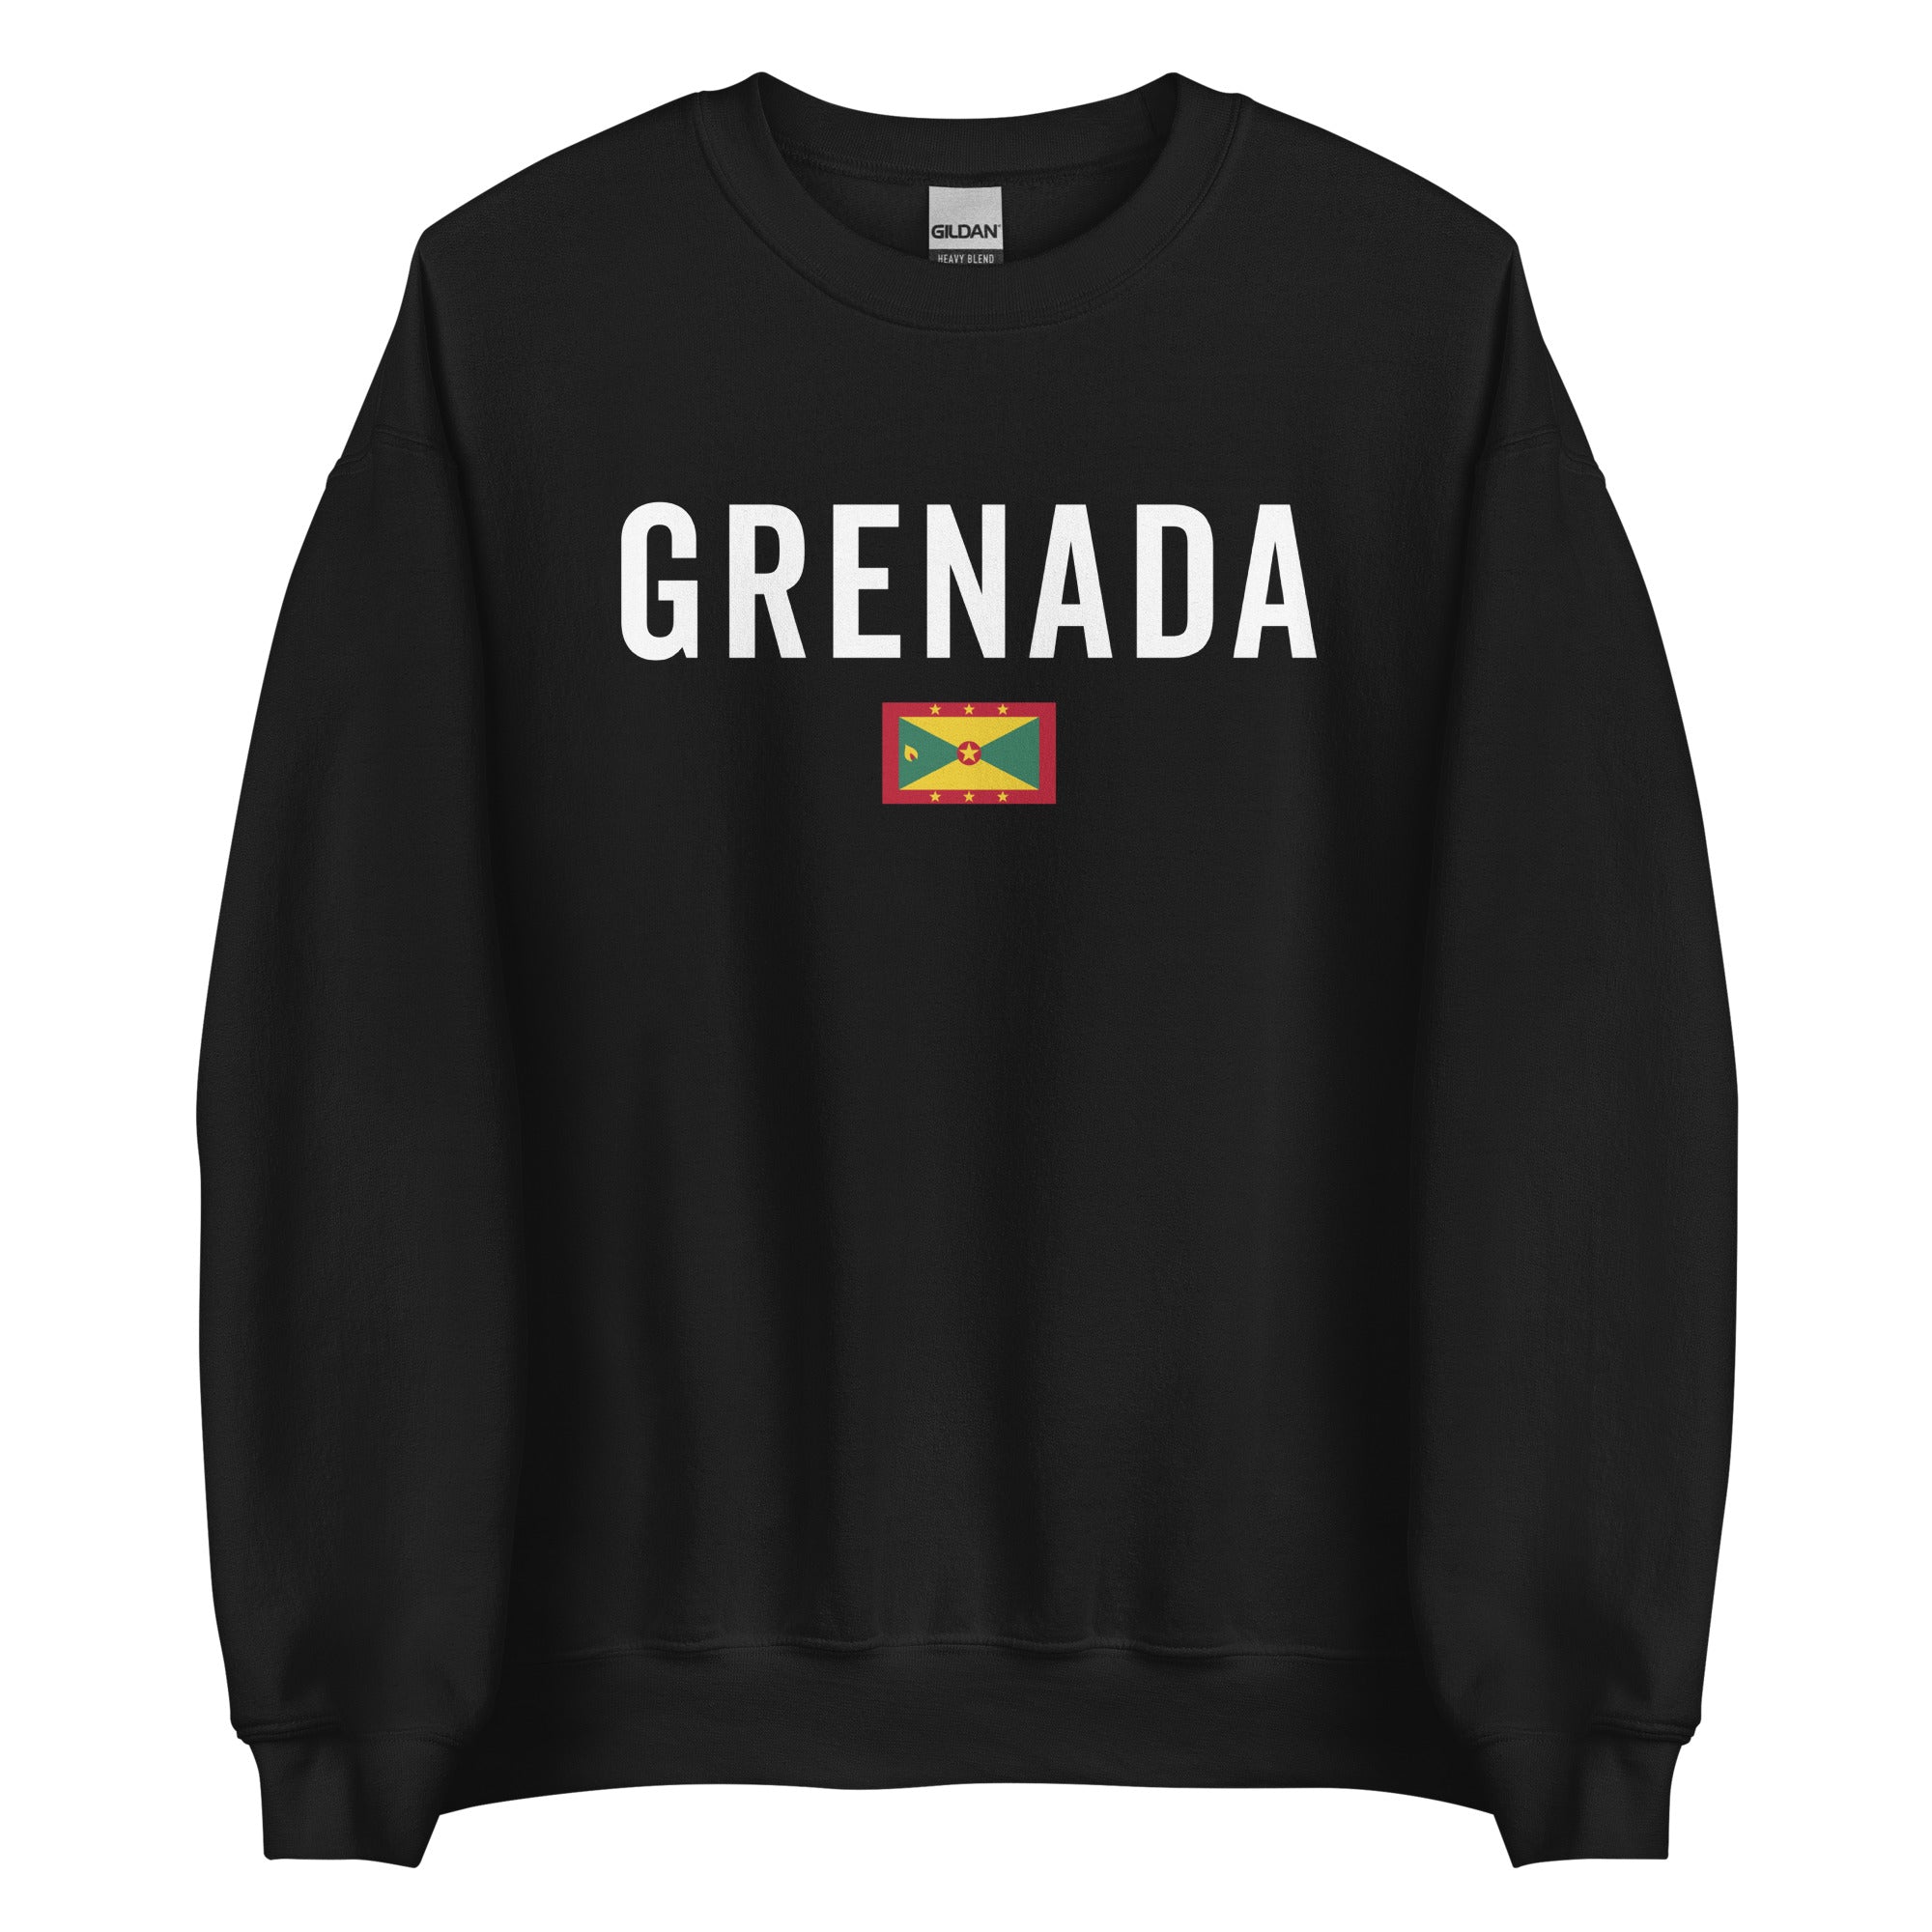 Grenada Flag Sweatshirt